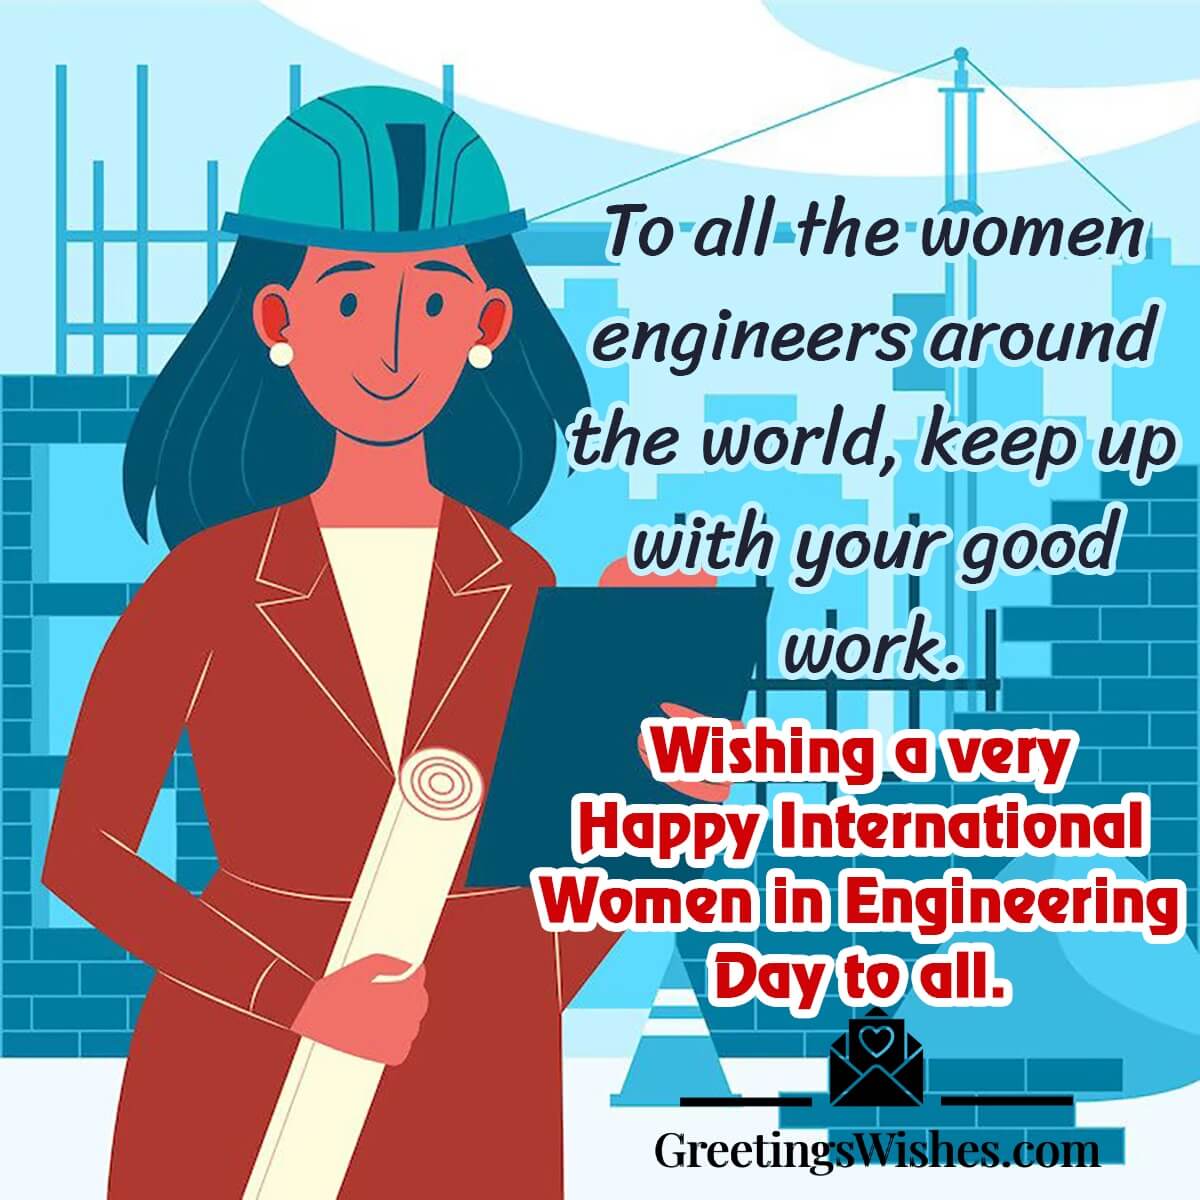 International Women in Engineering Day (23 June)